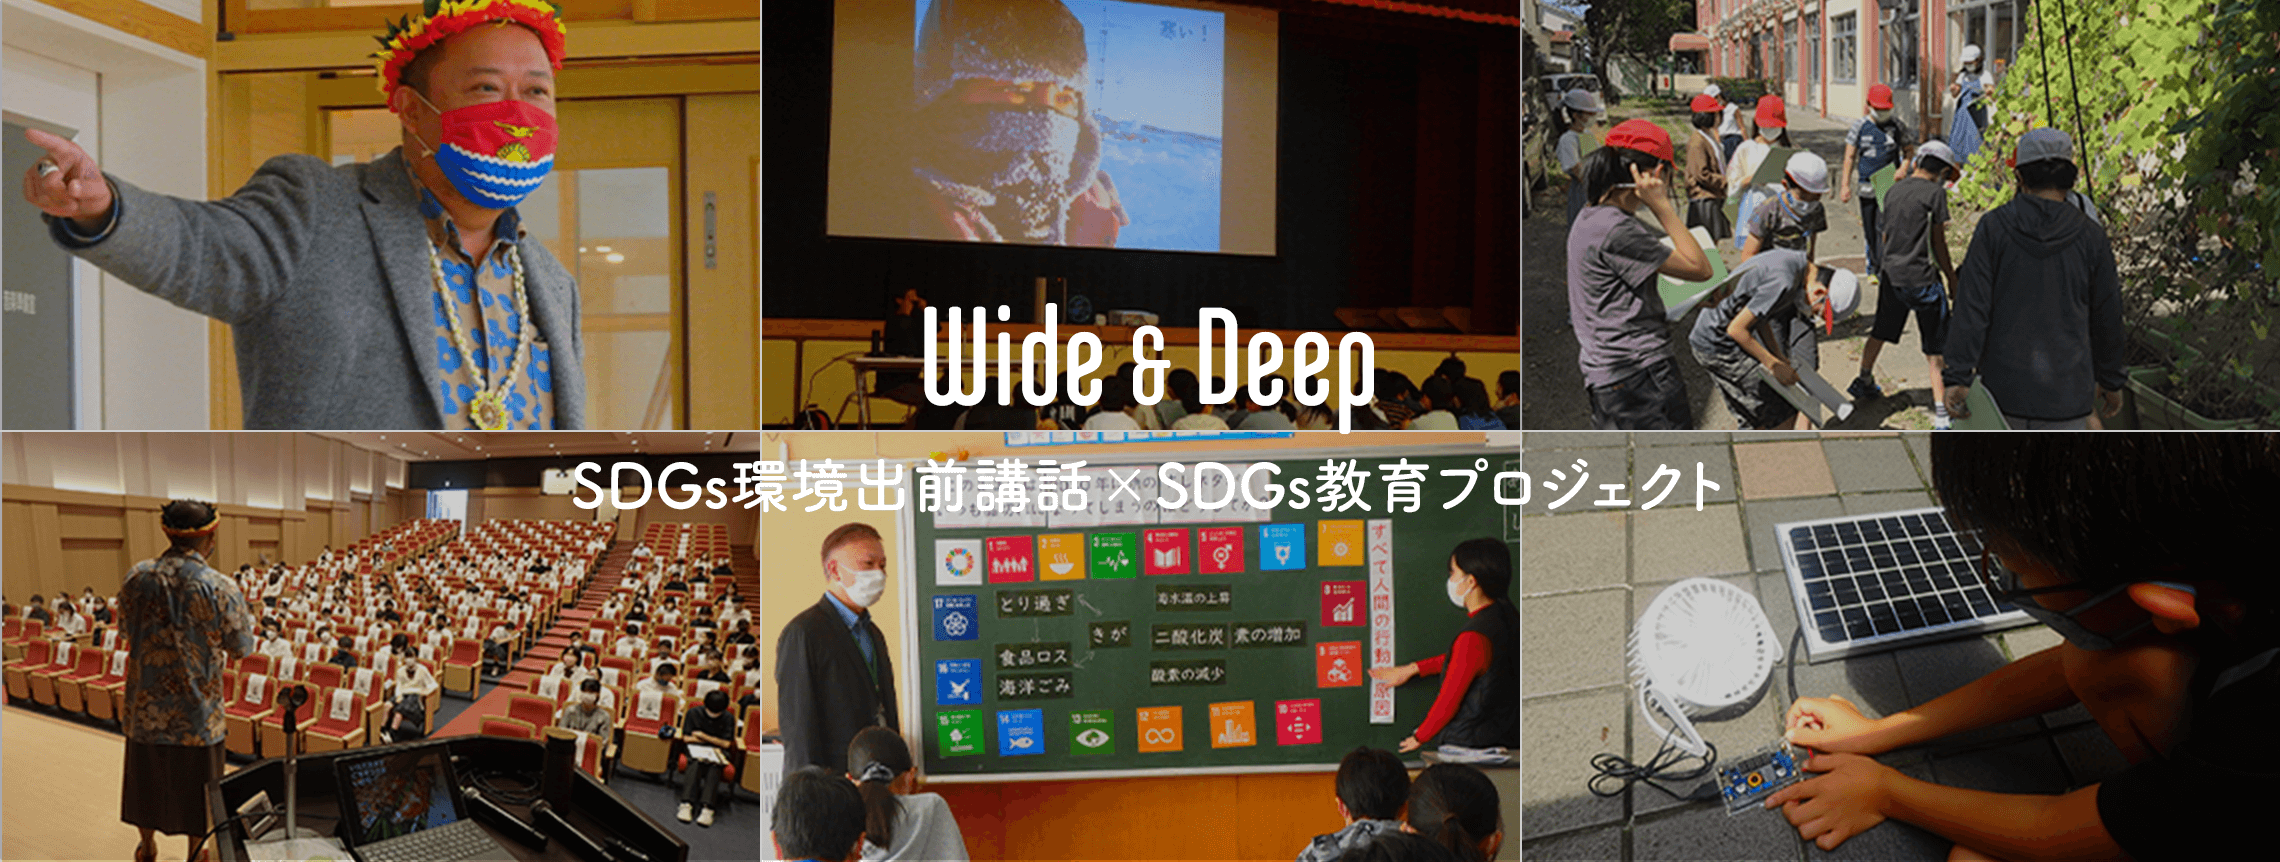 Wide & Deep SDGs環境出前講話×SDGs教育プロジェクト